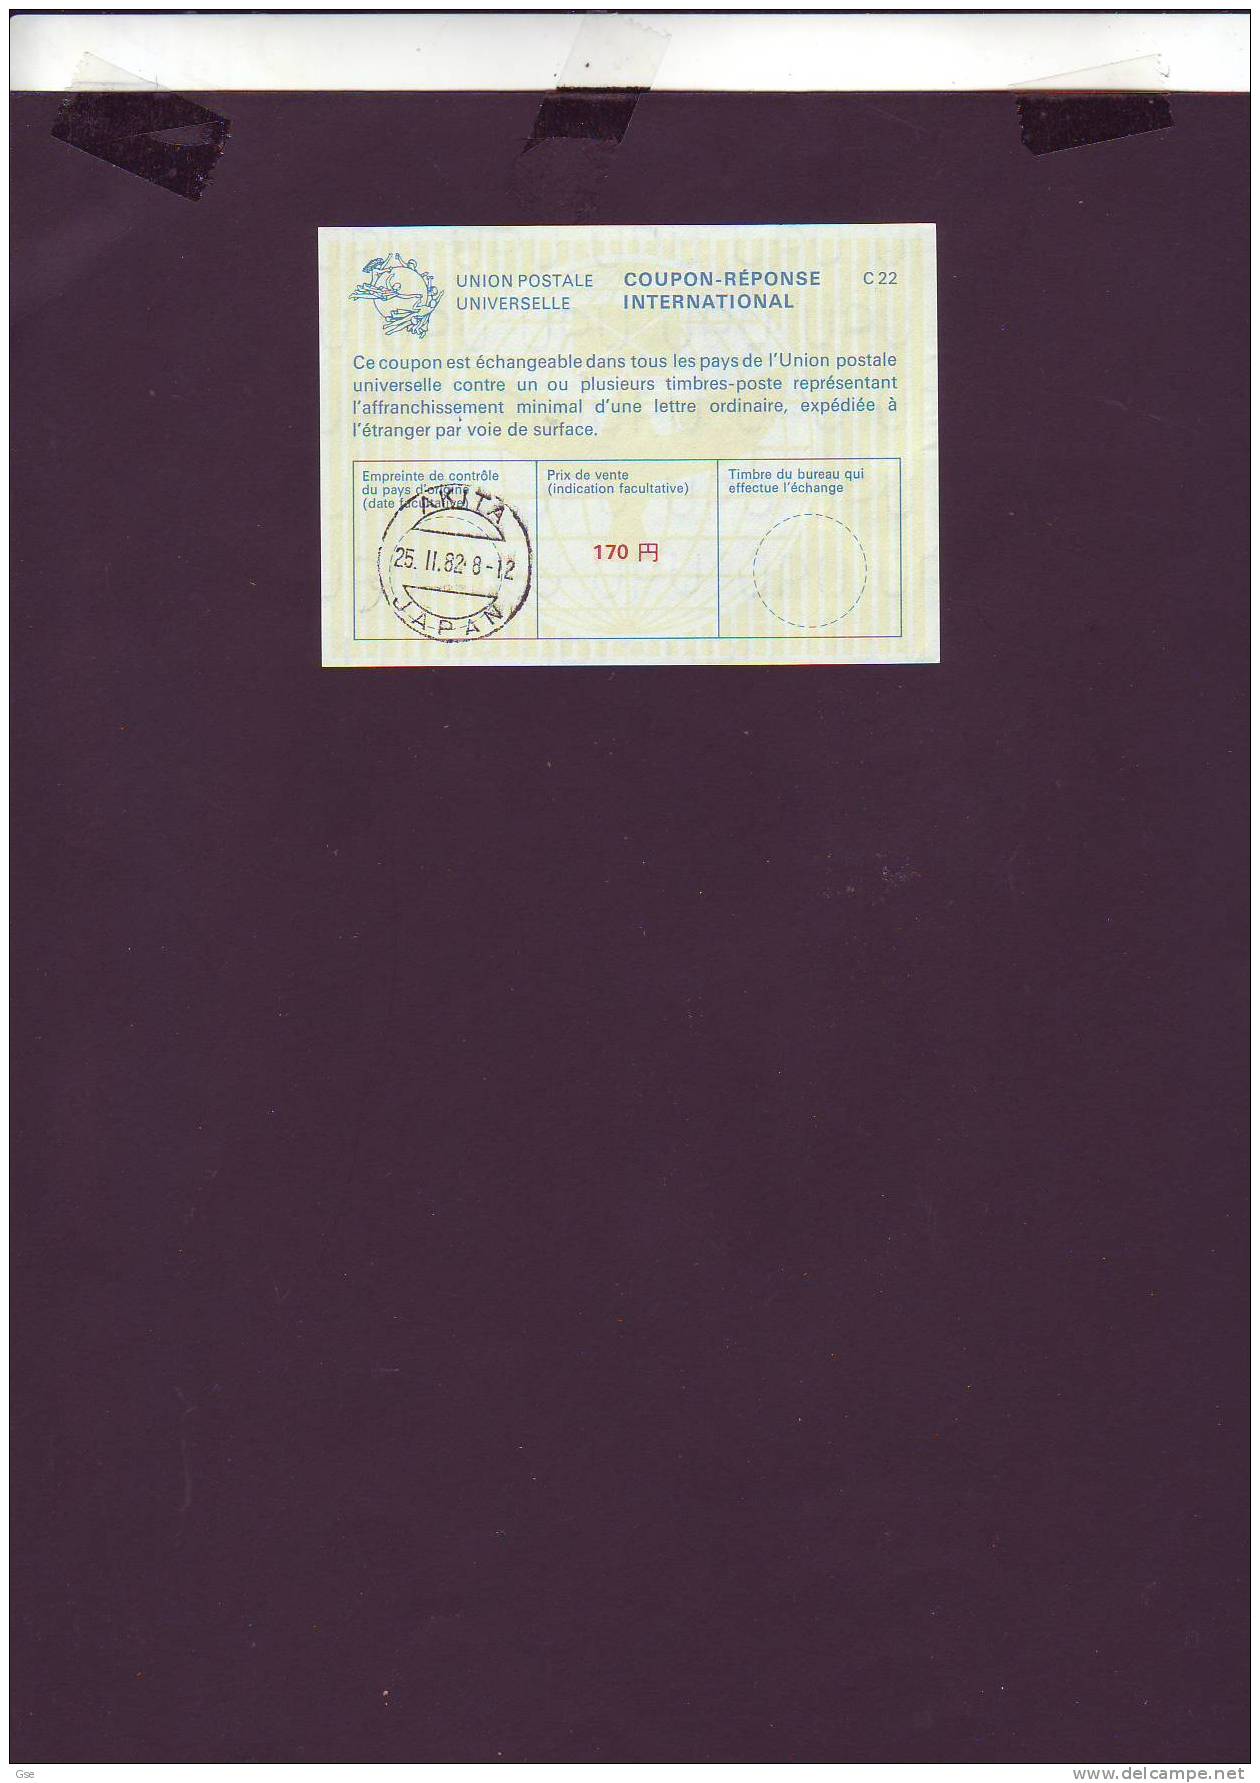 GIAPPONE 1982 - Coupon Réponse International - Cartoline Postali